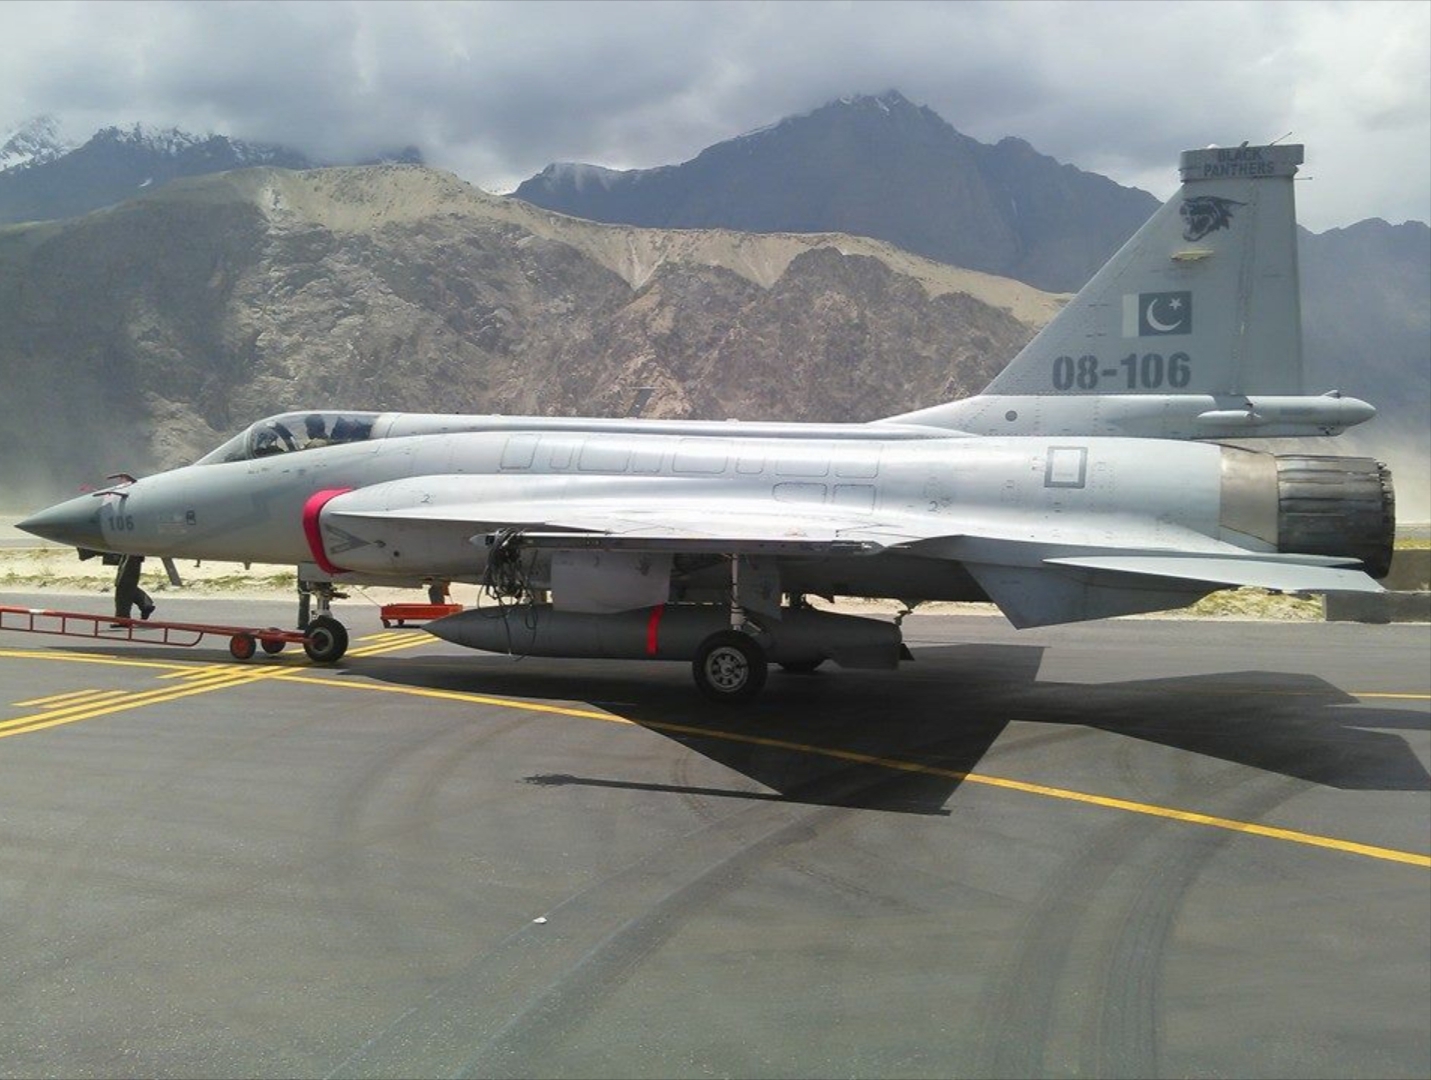 JF-17 Thunder 08-106